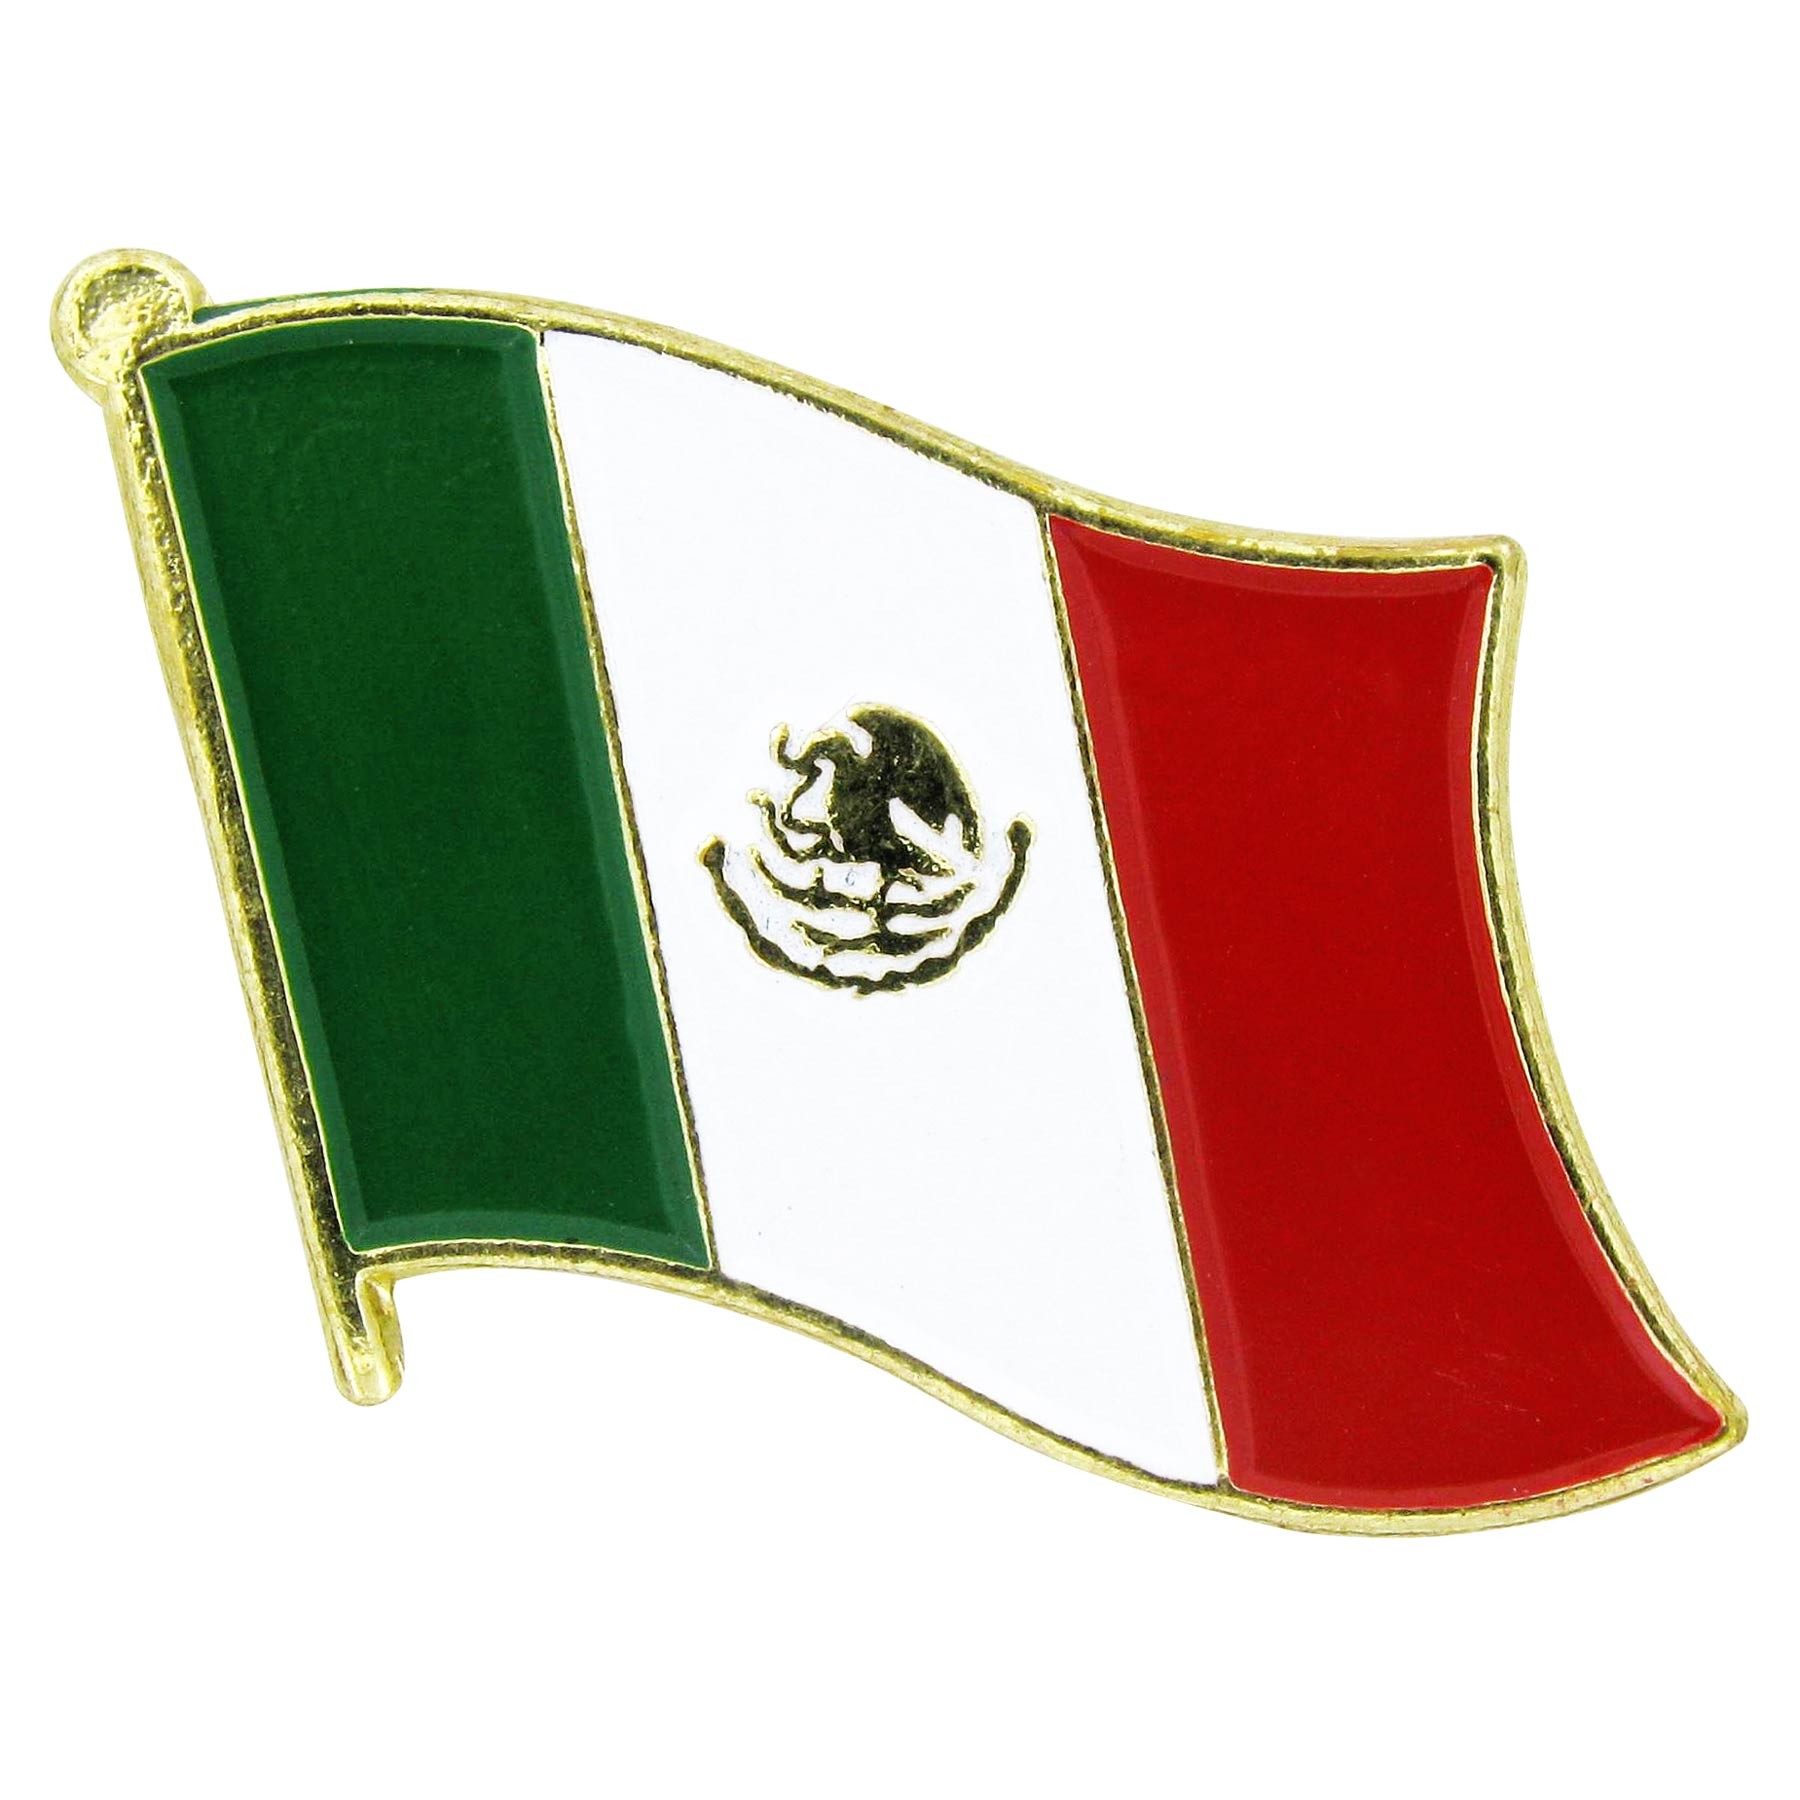 Mexican Flag Clip Art - Mexico Flag Clip Art